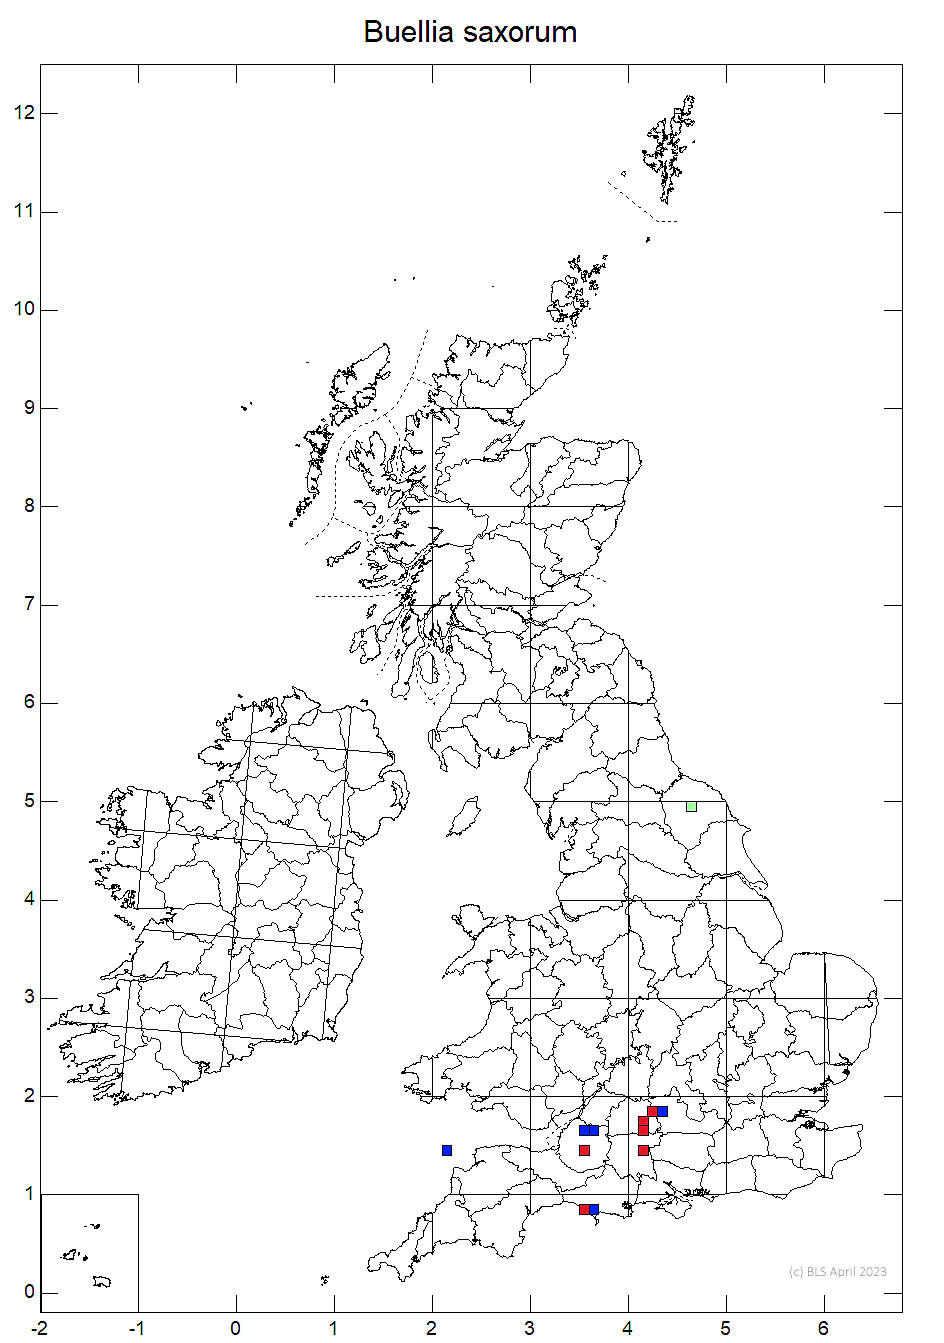 Buellia saxorum 10km sq distribution map